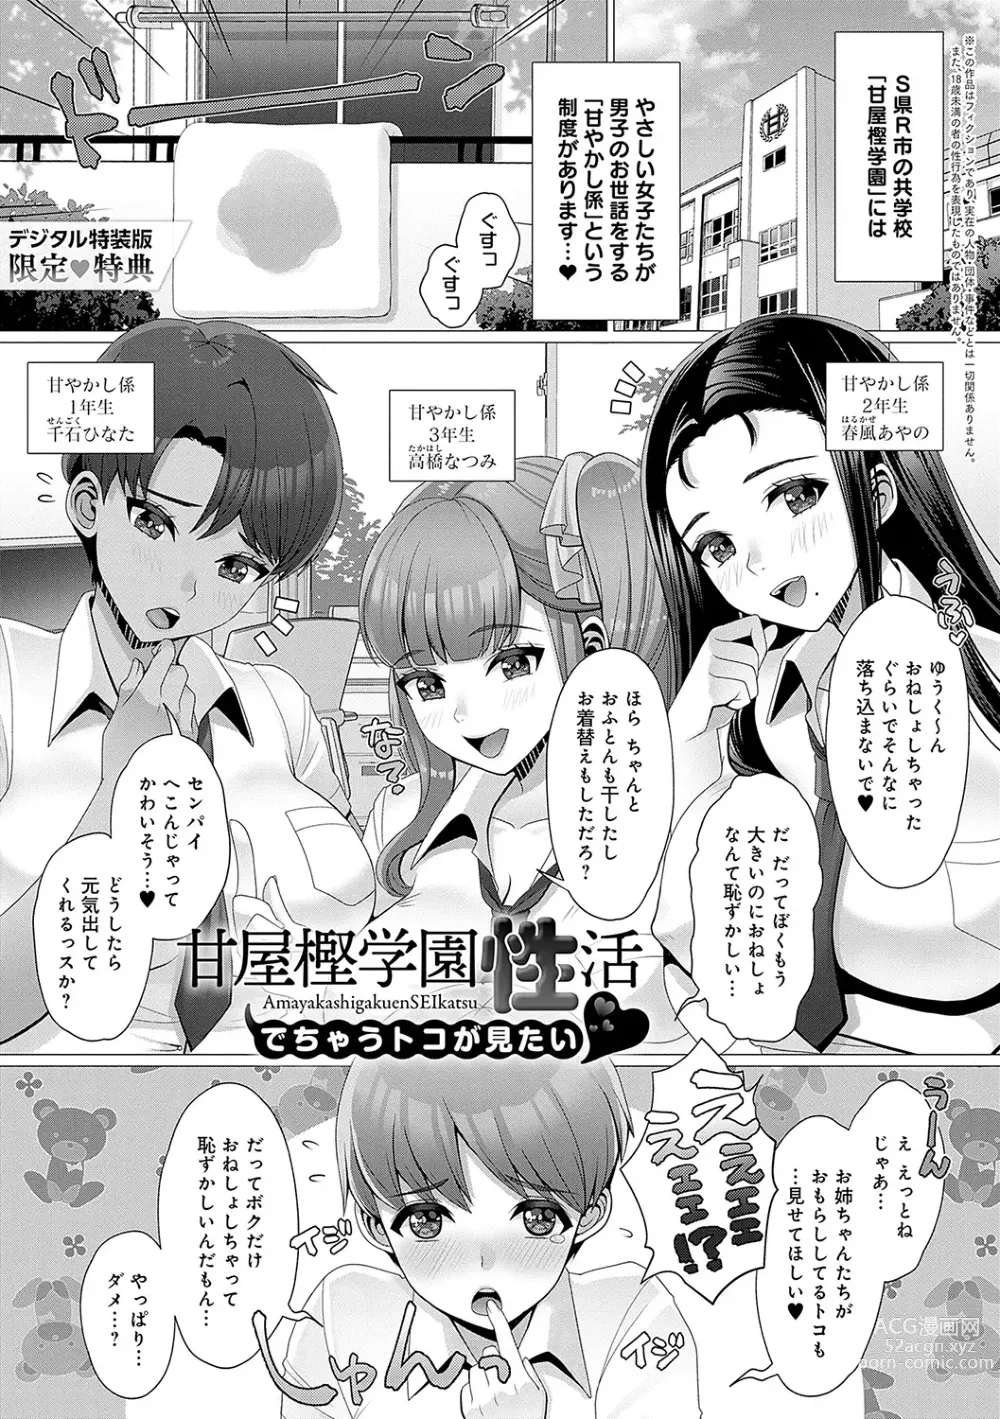 Page 221 of manga Gaman shitemo, dechau.